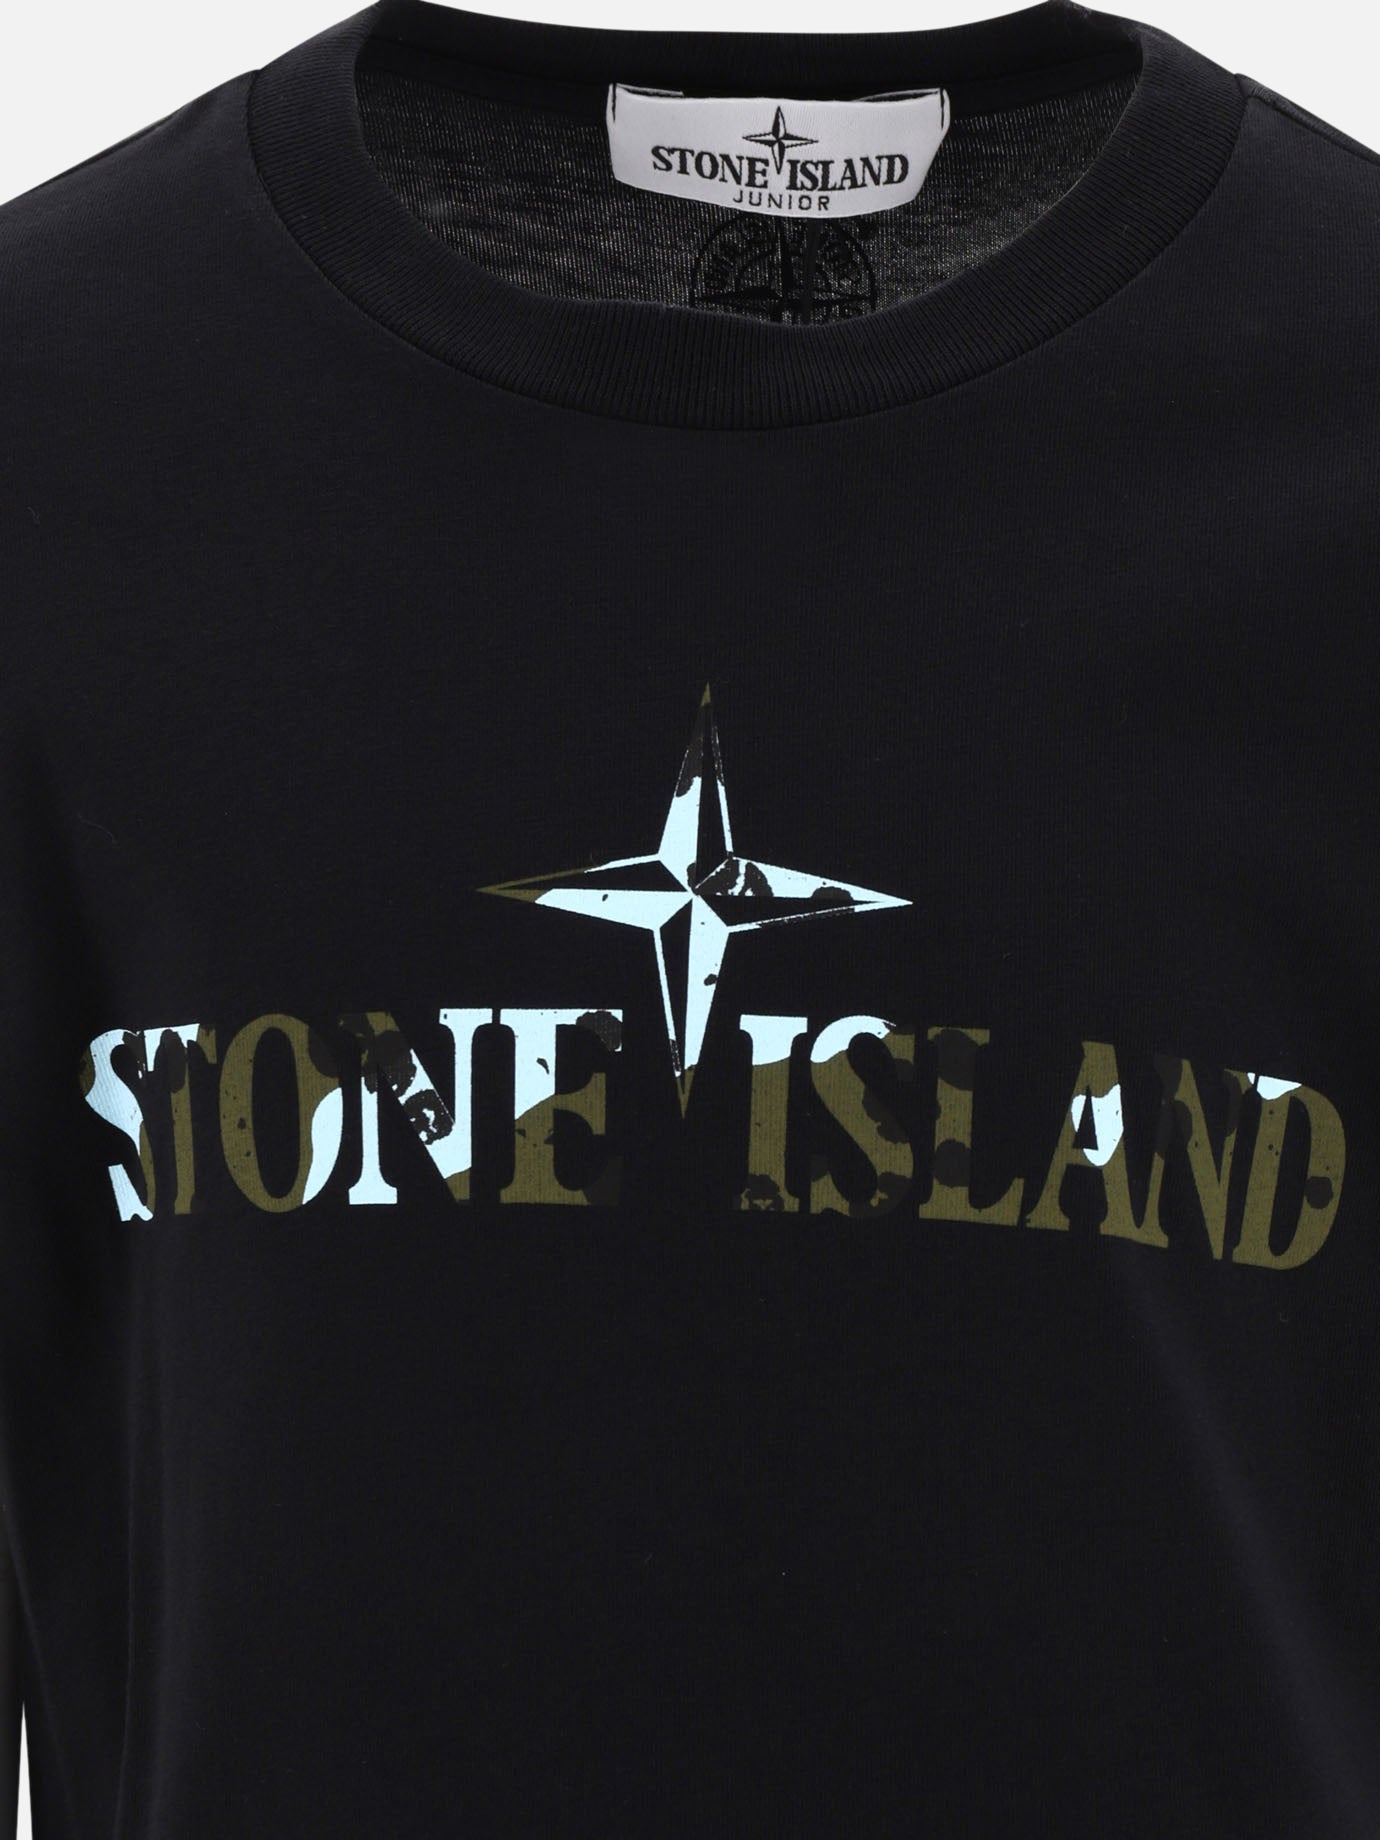 "Stone Island" t-shirt